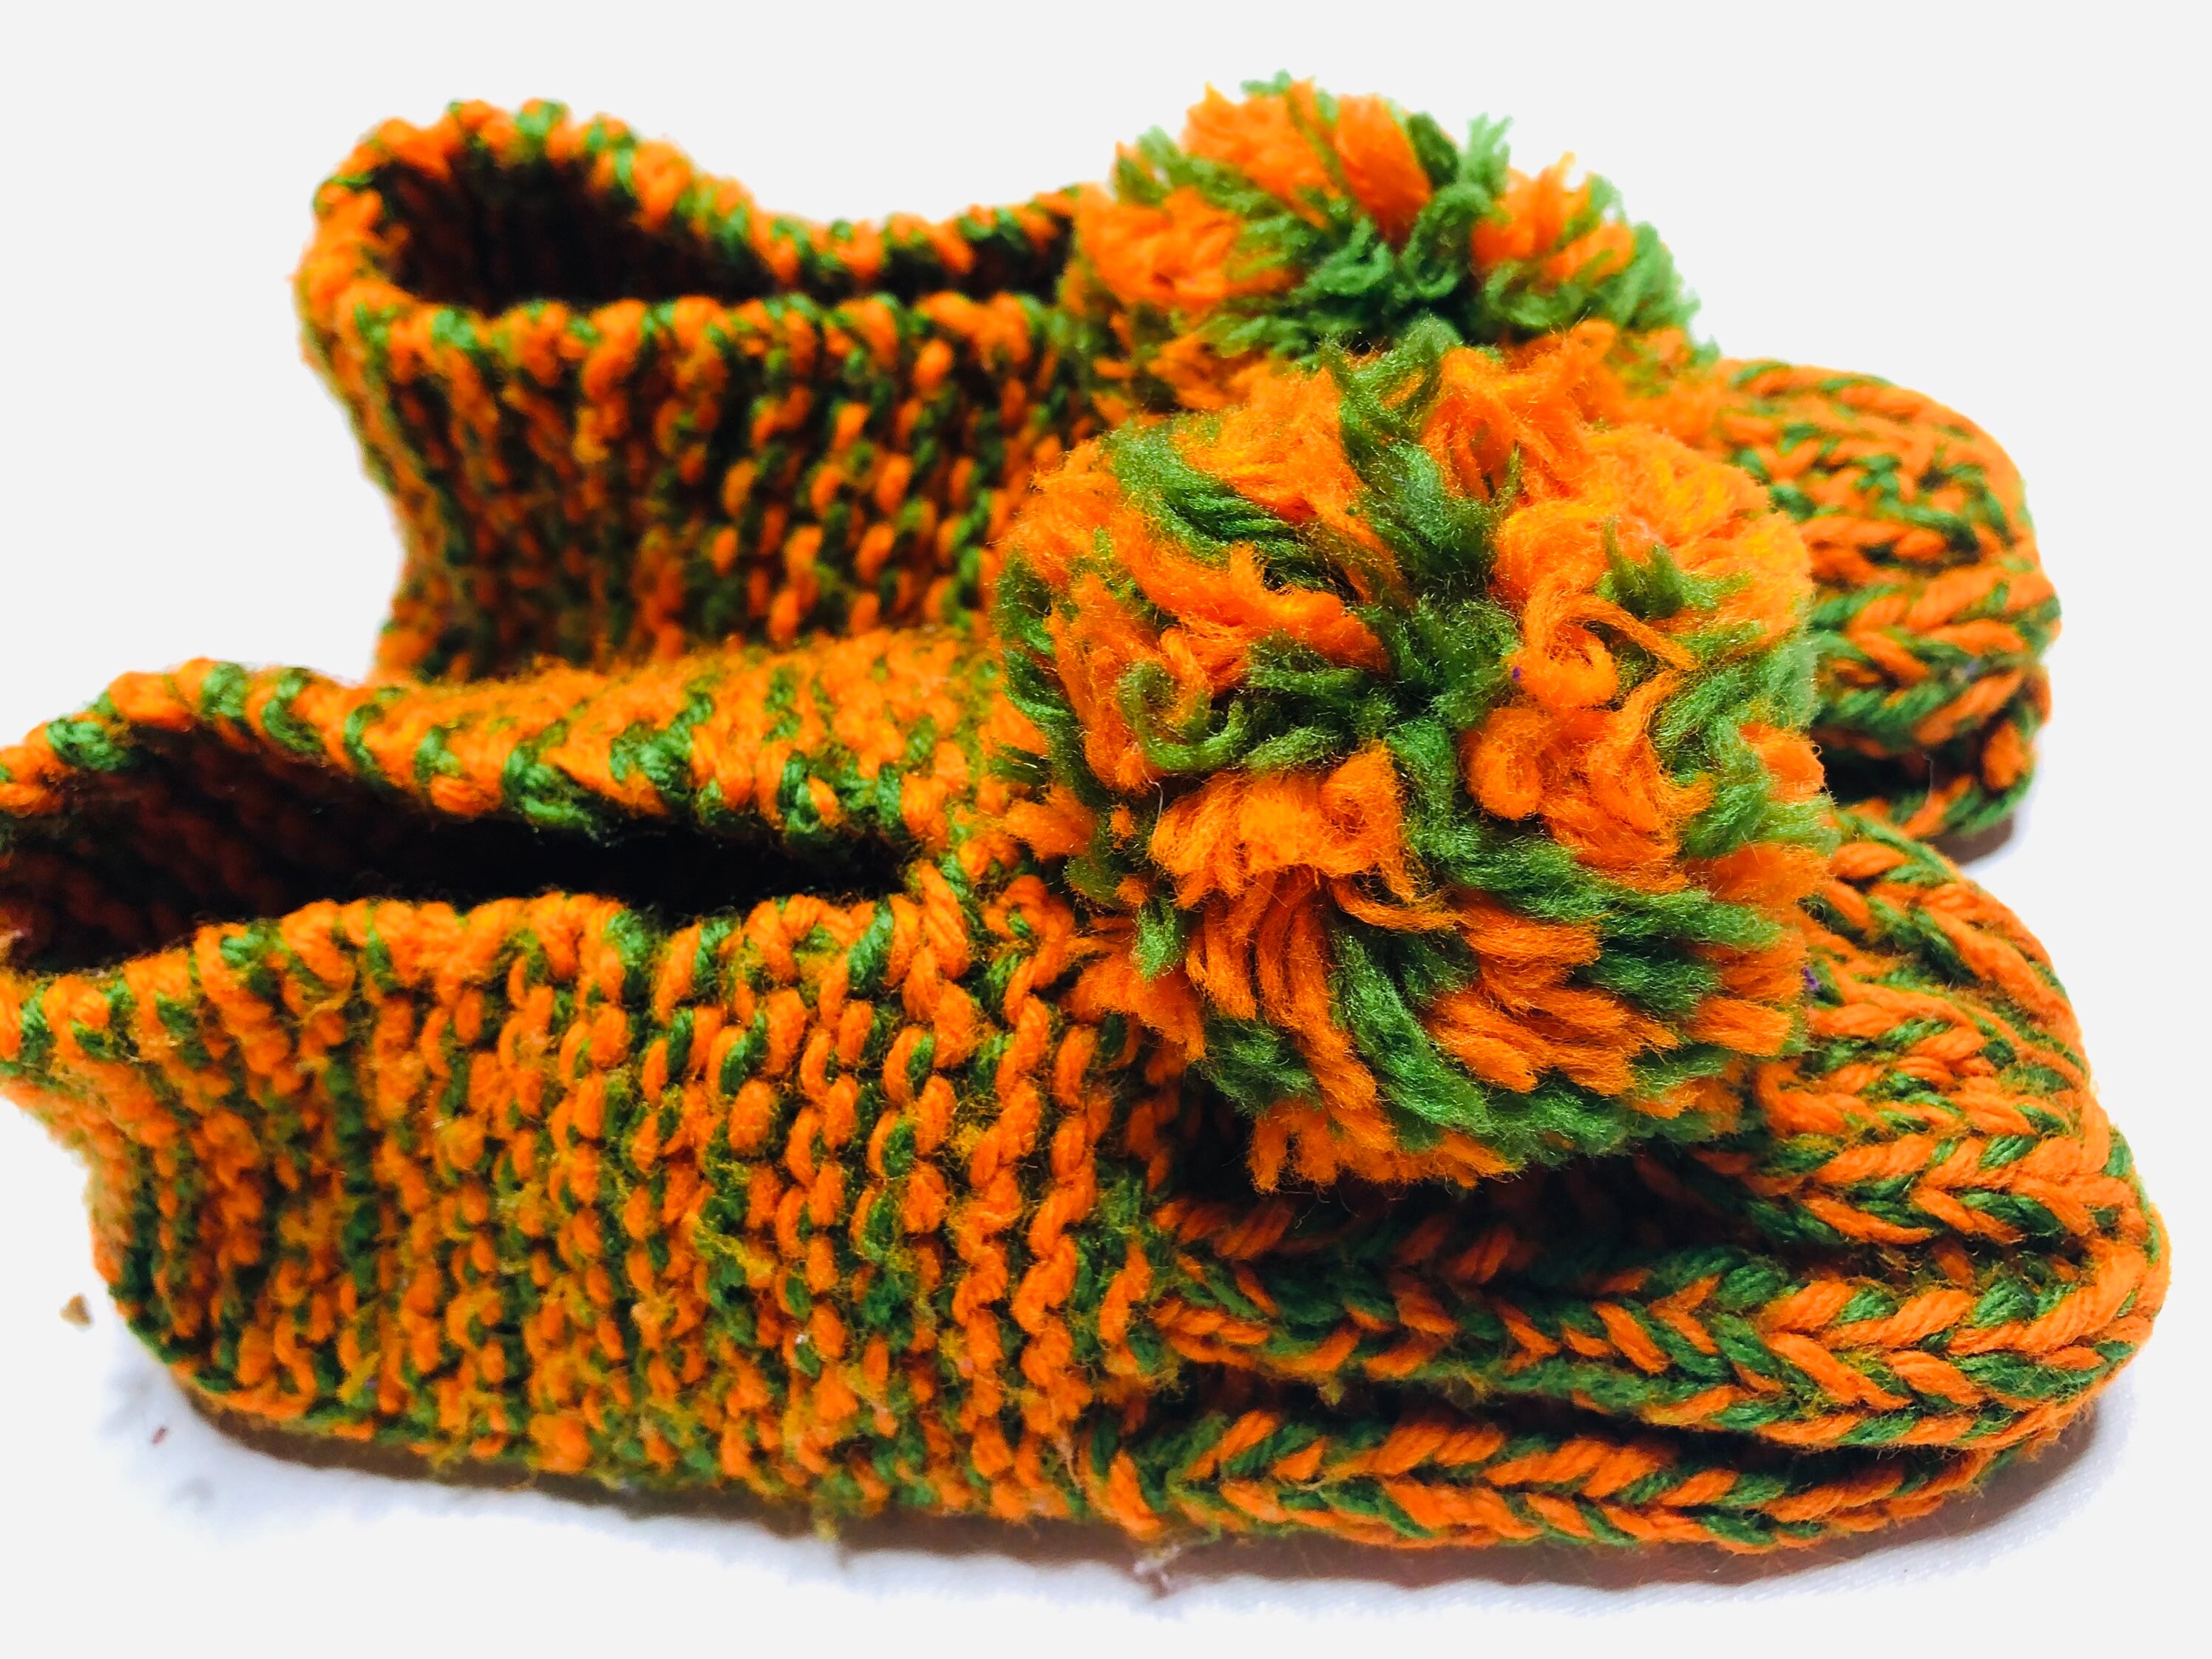 VTG 70’s Child Size Orange & Green Knit Slippers w/ Pom Poms Super Cute Like New Measures 7” L x 3” W Kleding Unisex kinderkleding Pyjamas & Badjassen 